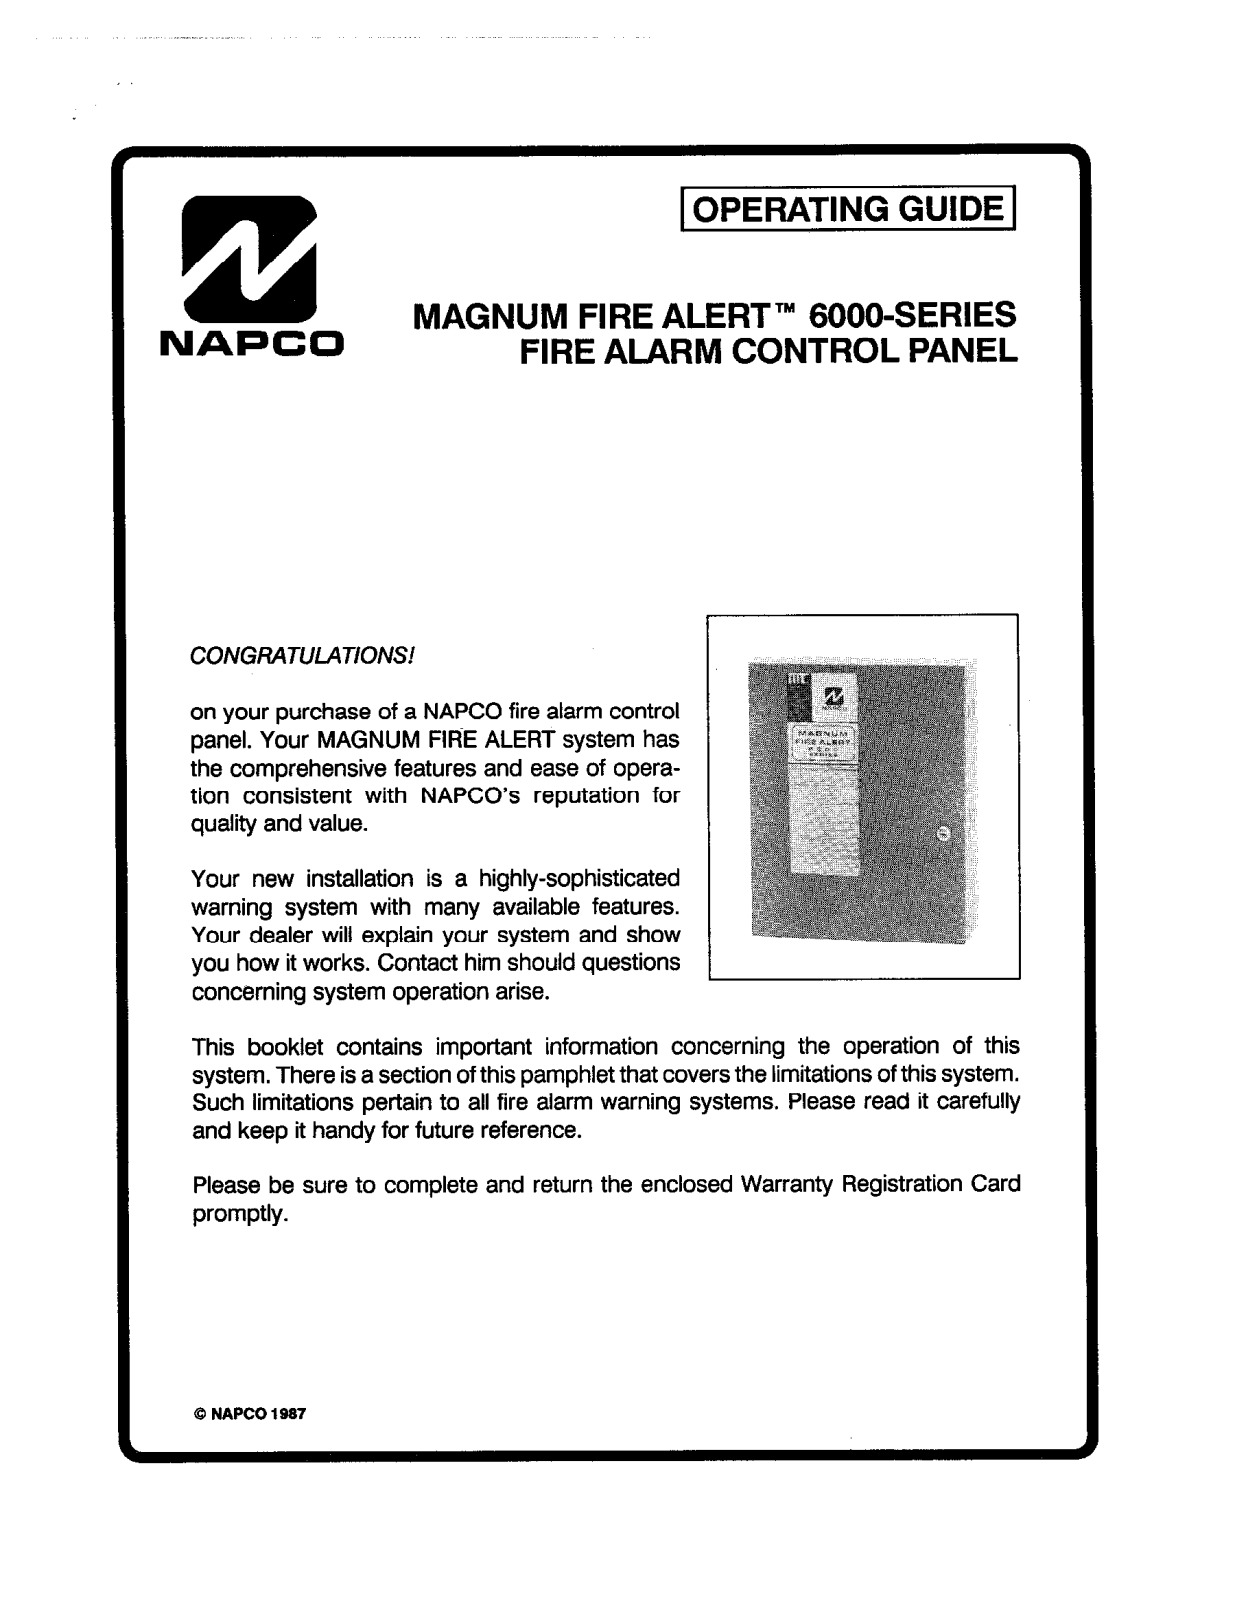 Napco MAGNUM ALERT 6000 FIRE ALARM operating Manual